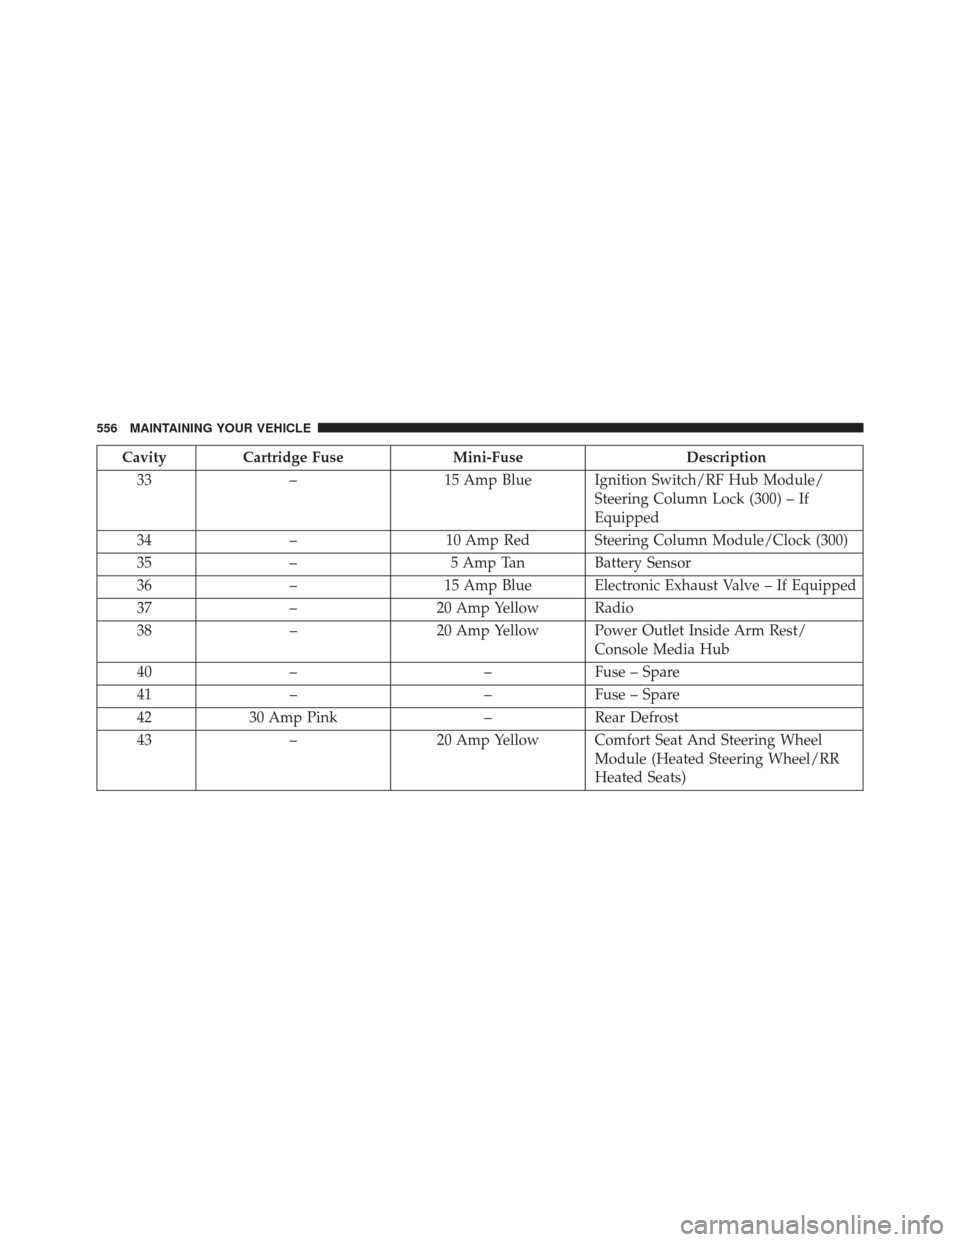 DODGE CHALLENGER SRT 2016 3.G Owners Manual CavityCartridge Fuse Mini-Fuse Description
33 – 15 Amp Blue Ignition Switch/RF Hub Module/
Steering Column Lock (300) – If
Equipped
34 – 10 Amp Red Steering Column Module/Clock (300)
35 – 5 Am